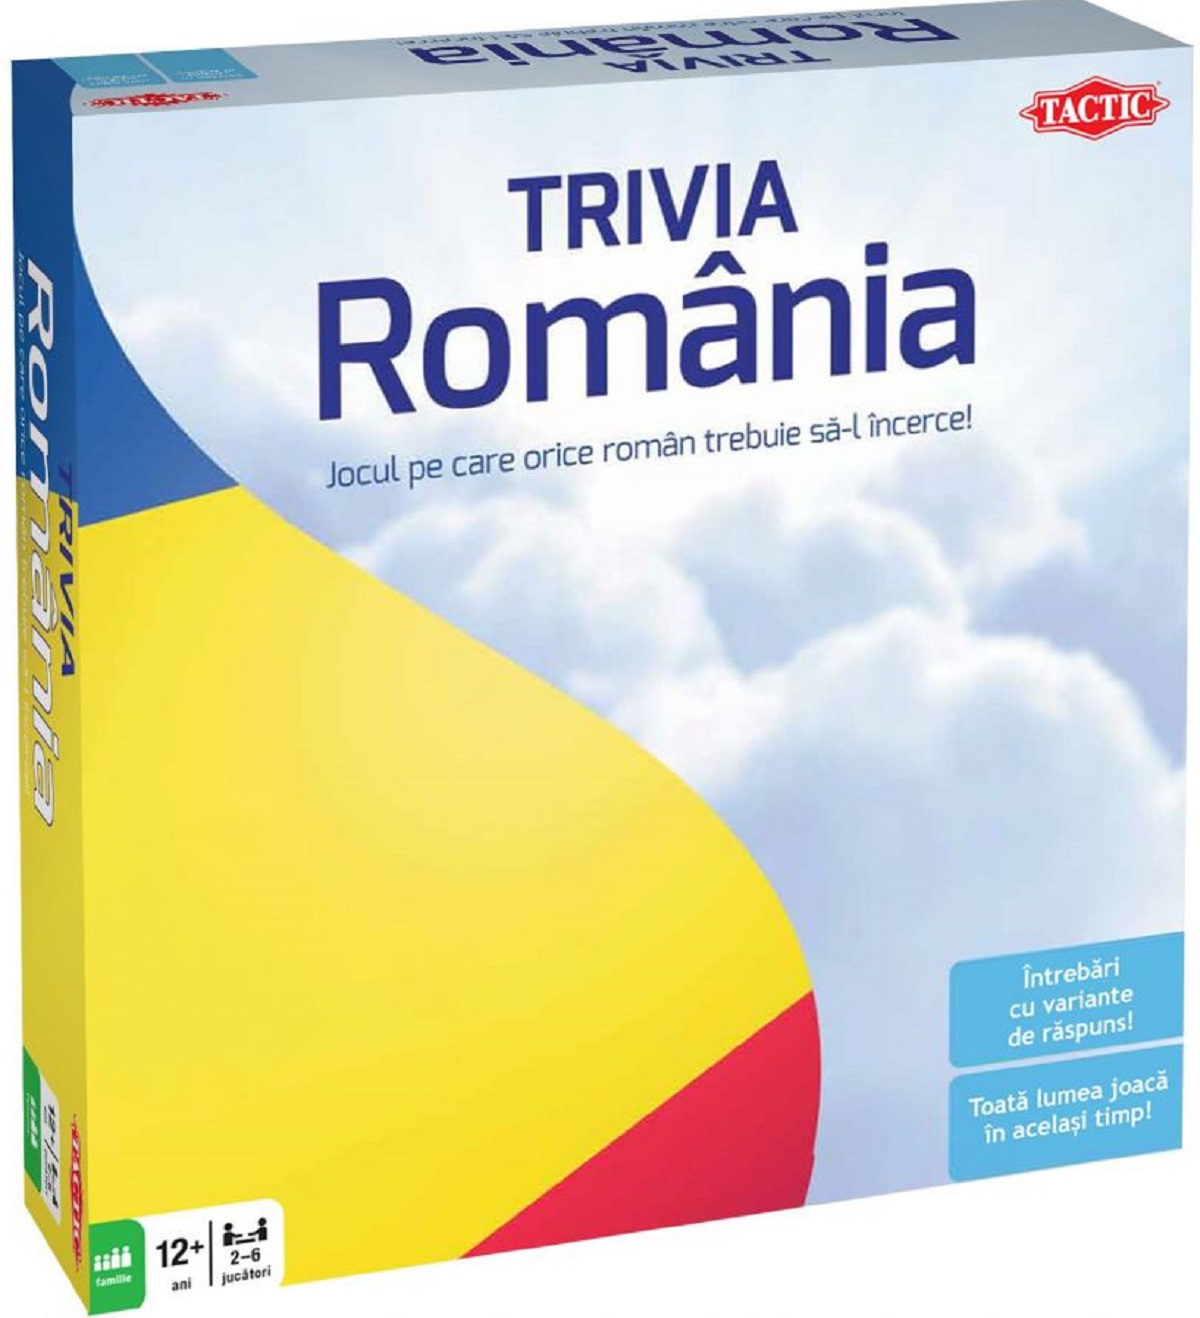 Joc: Trivia Romania